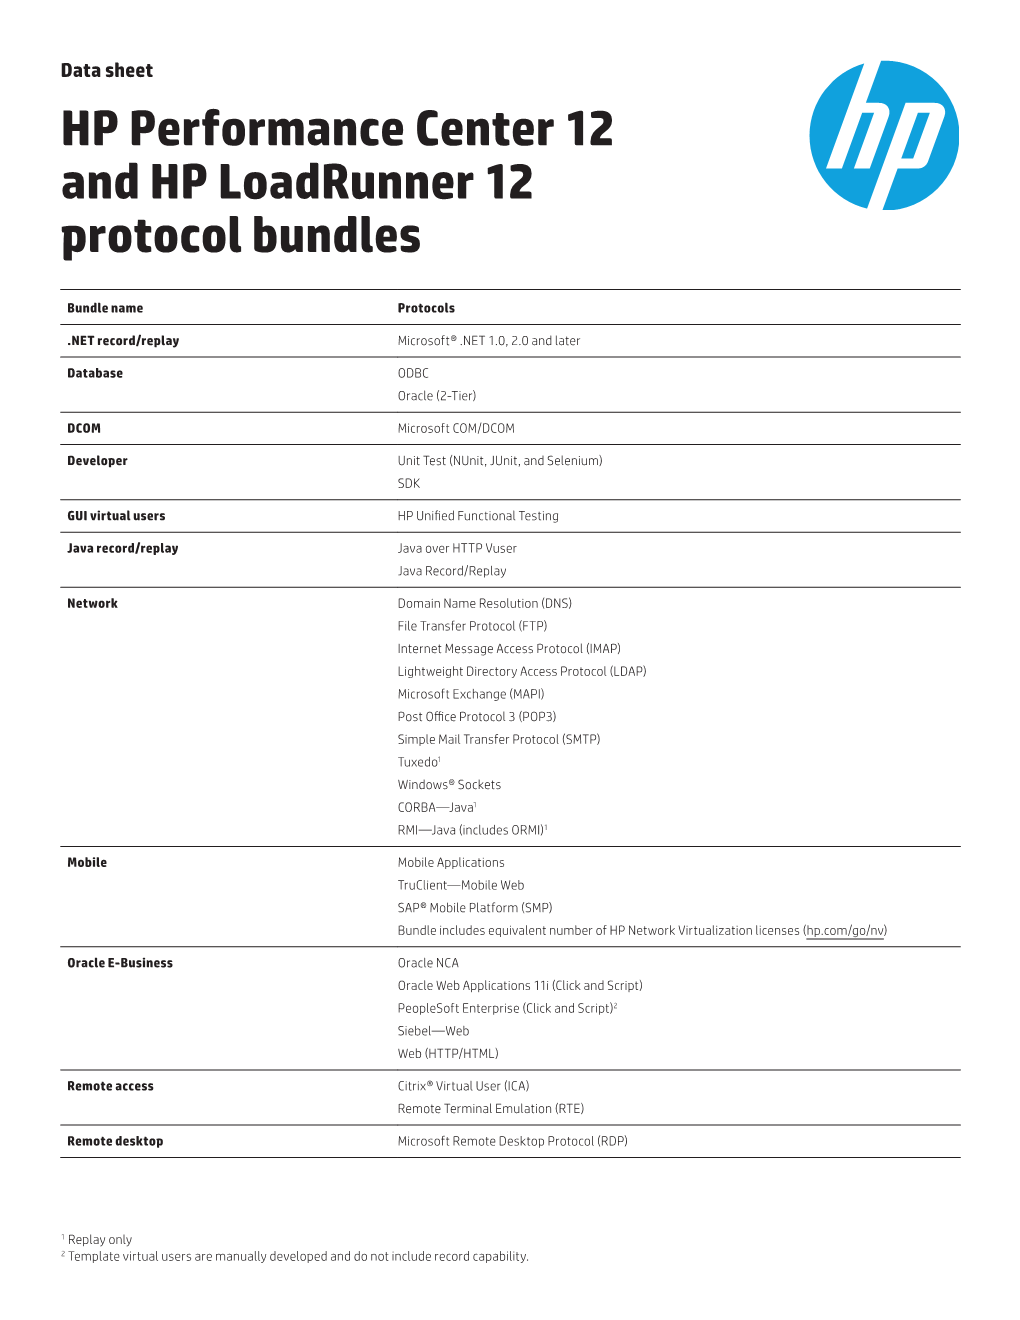 HP Performance Center 12 and HP Loadrunner 12 Protocol Bundles